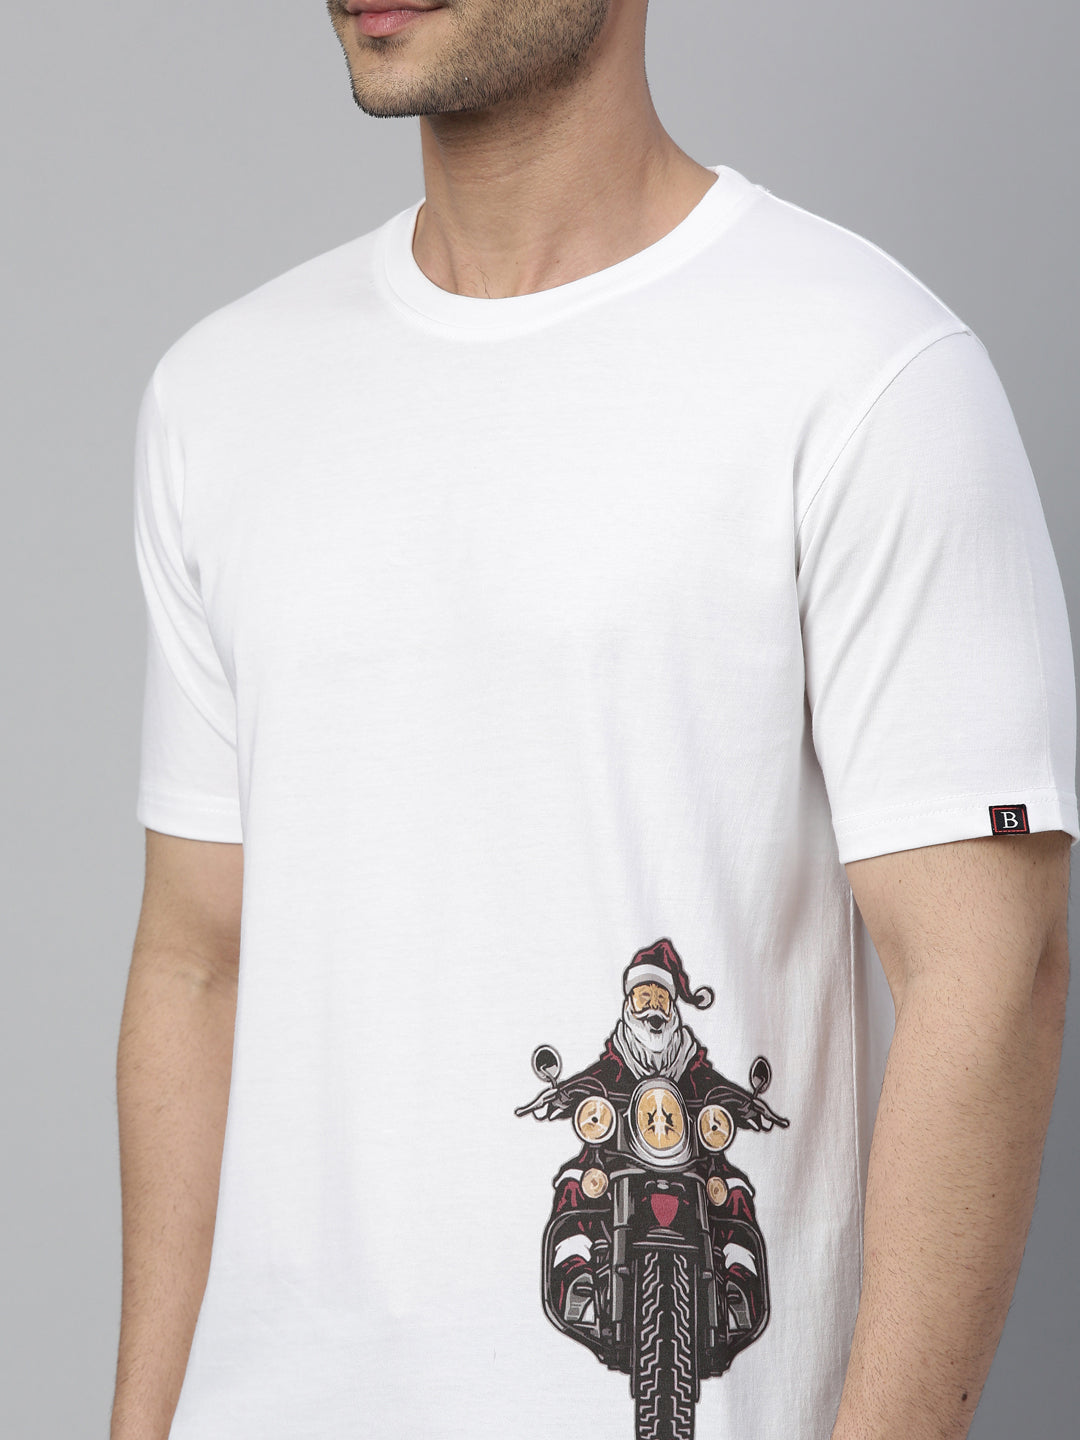 Riding On A Bike With Santa T-Shirt Graphic T-Shirts Bushirt   